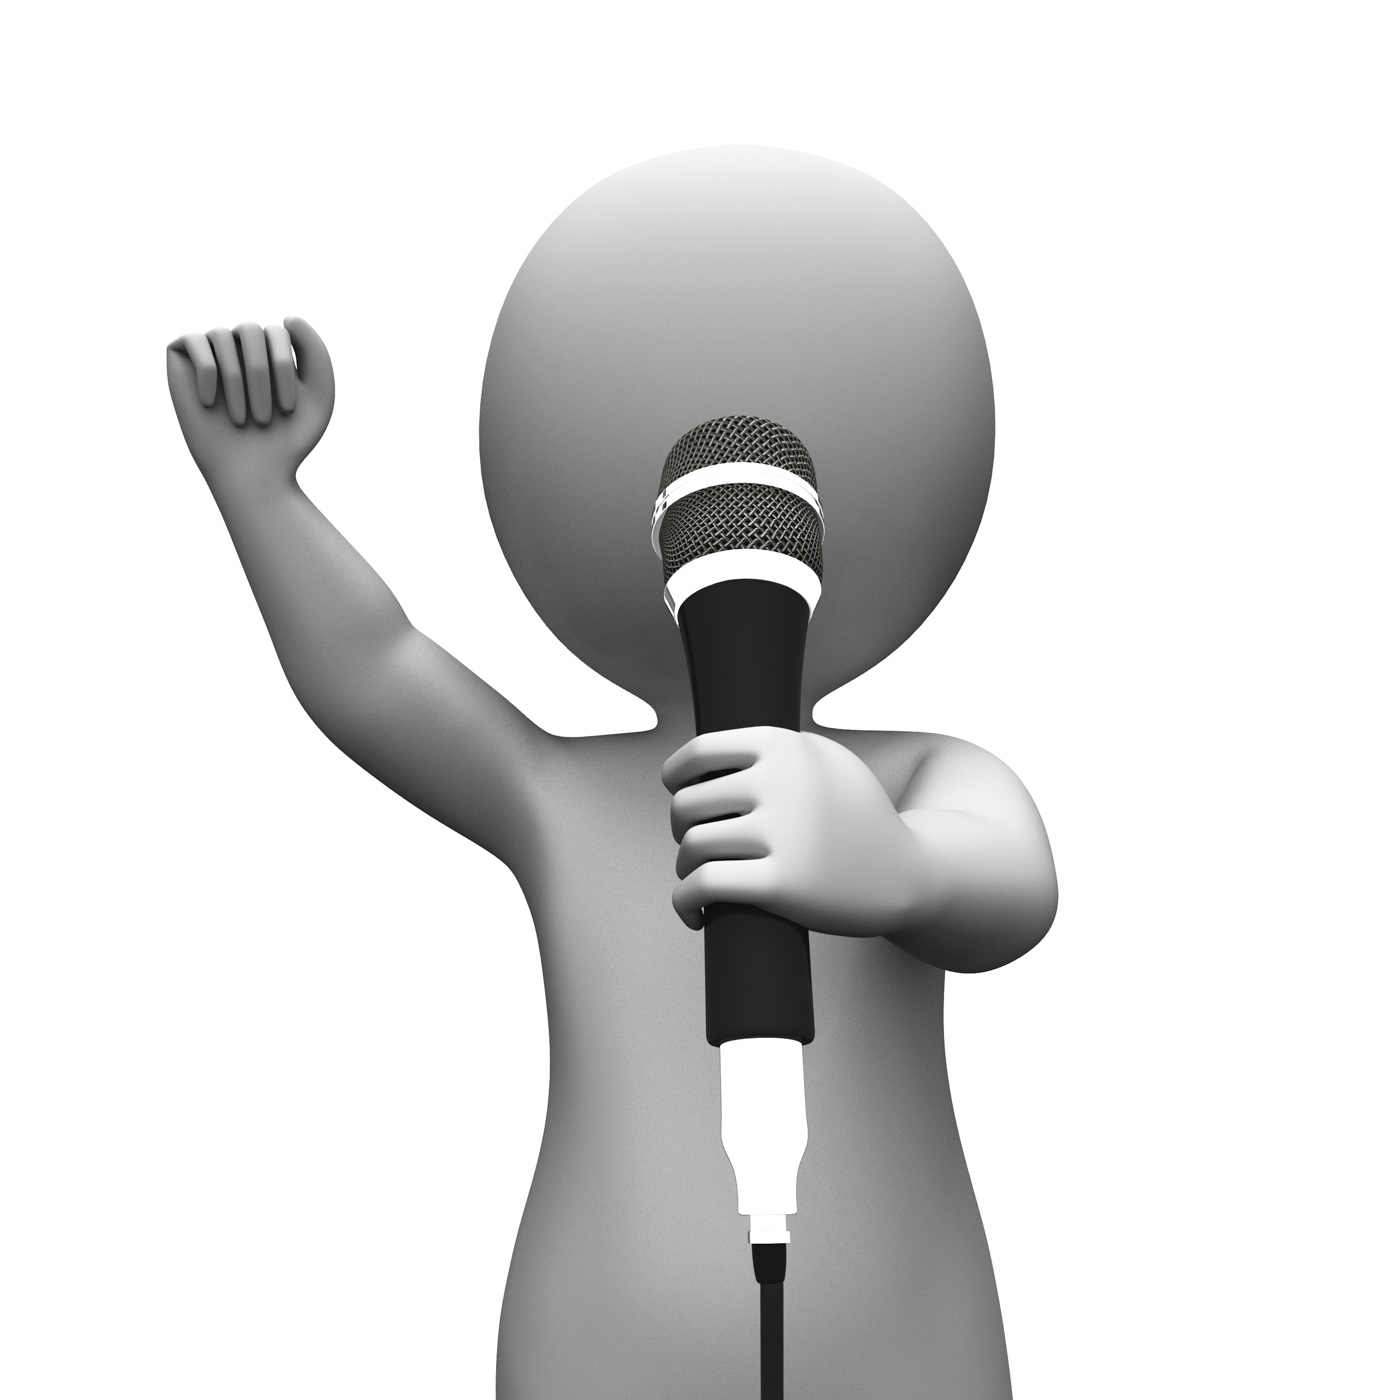 Singer singing character shows music or karaoke concert photo